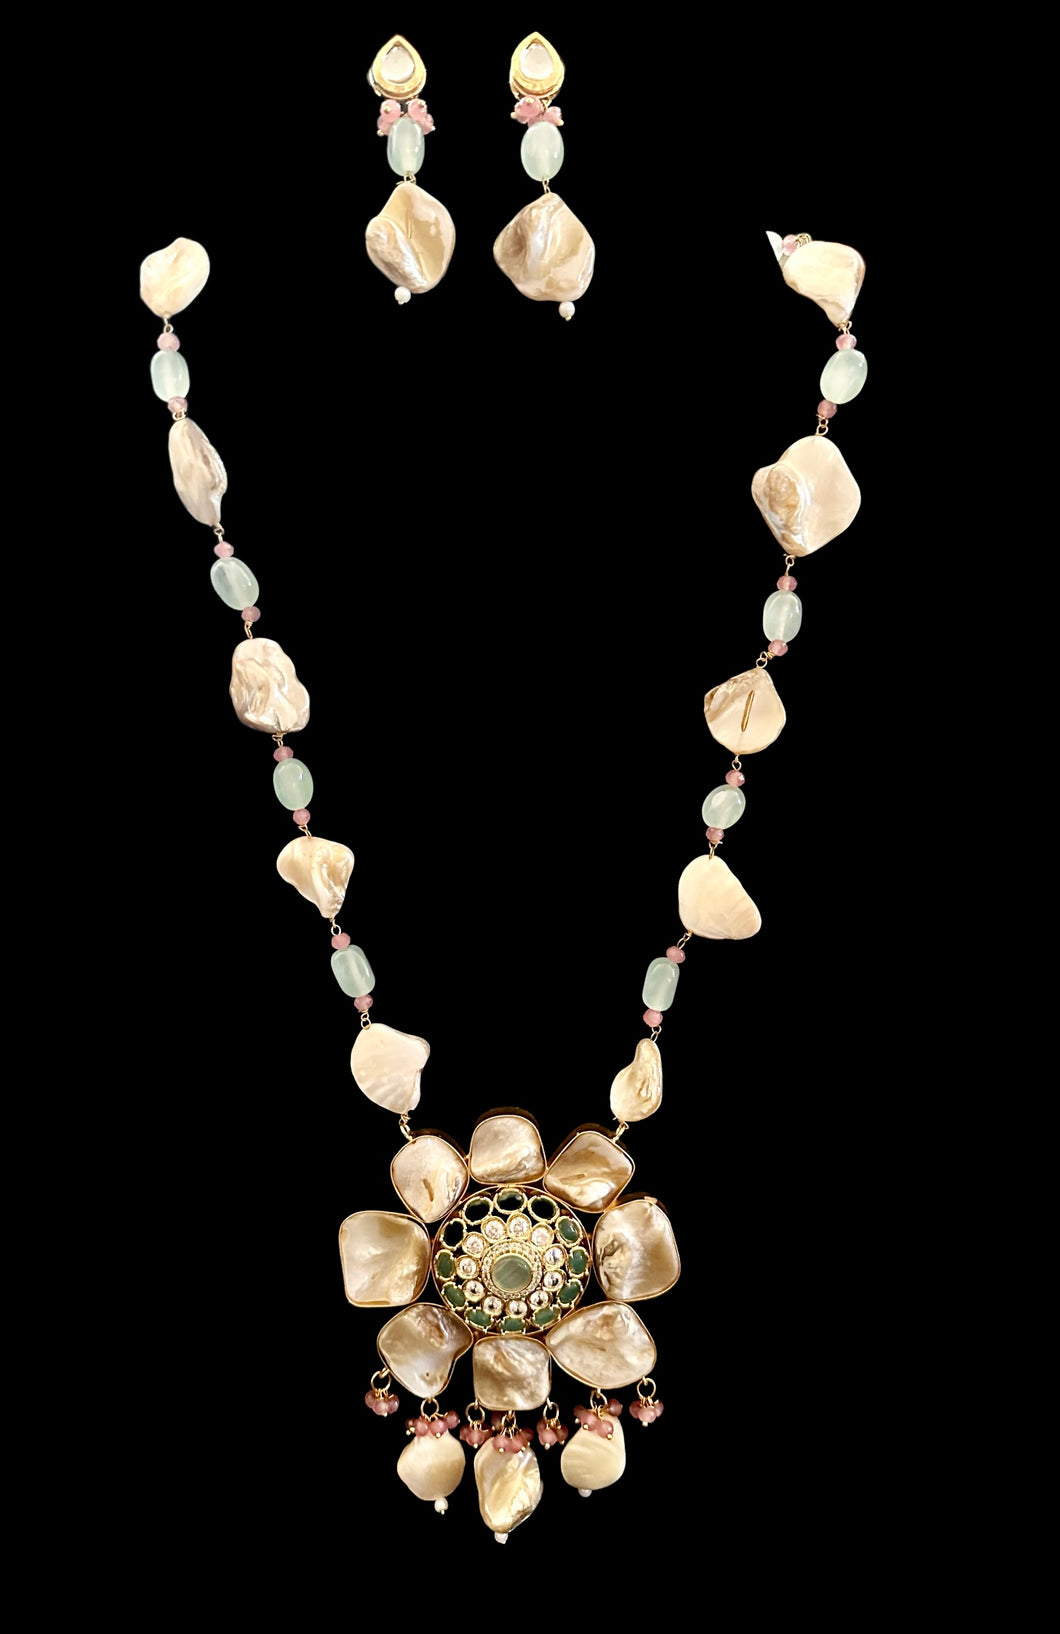 Blue agate stone necklace set